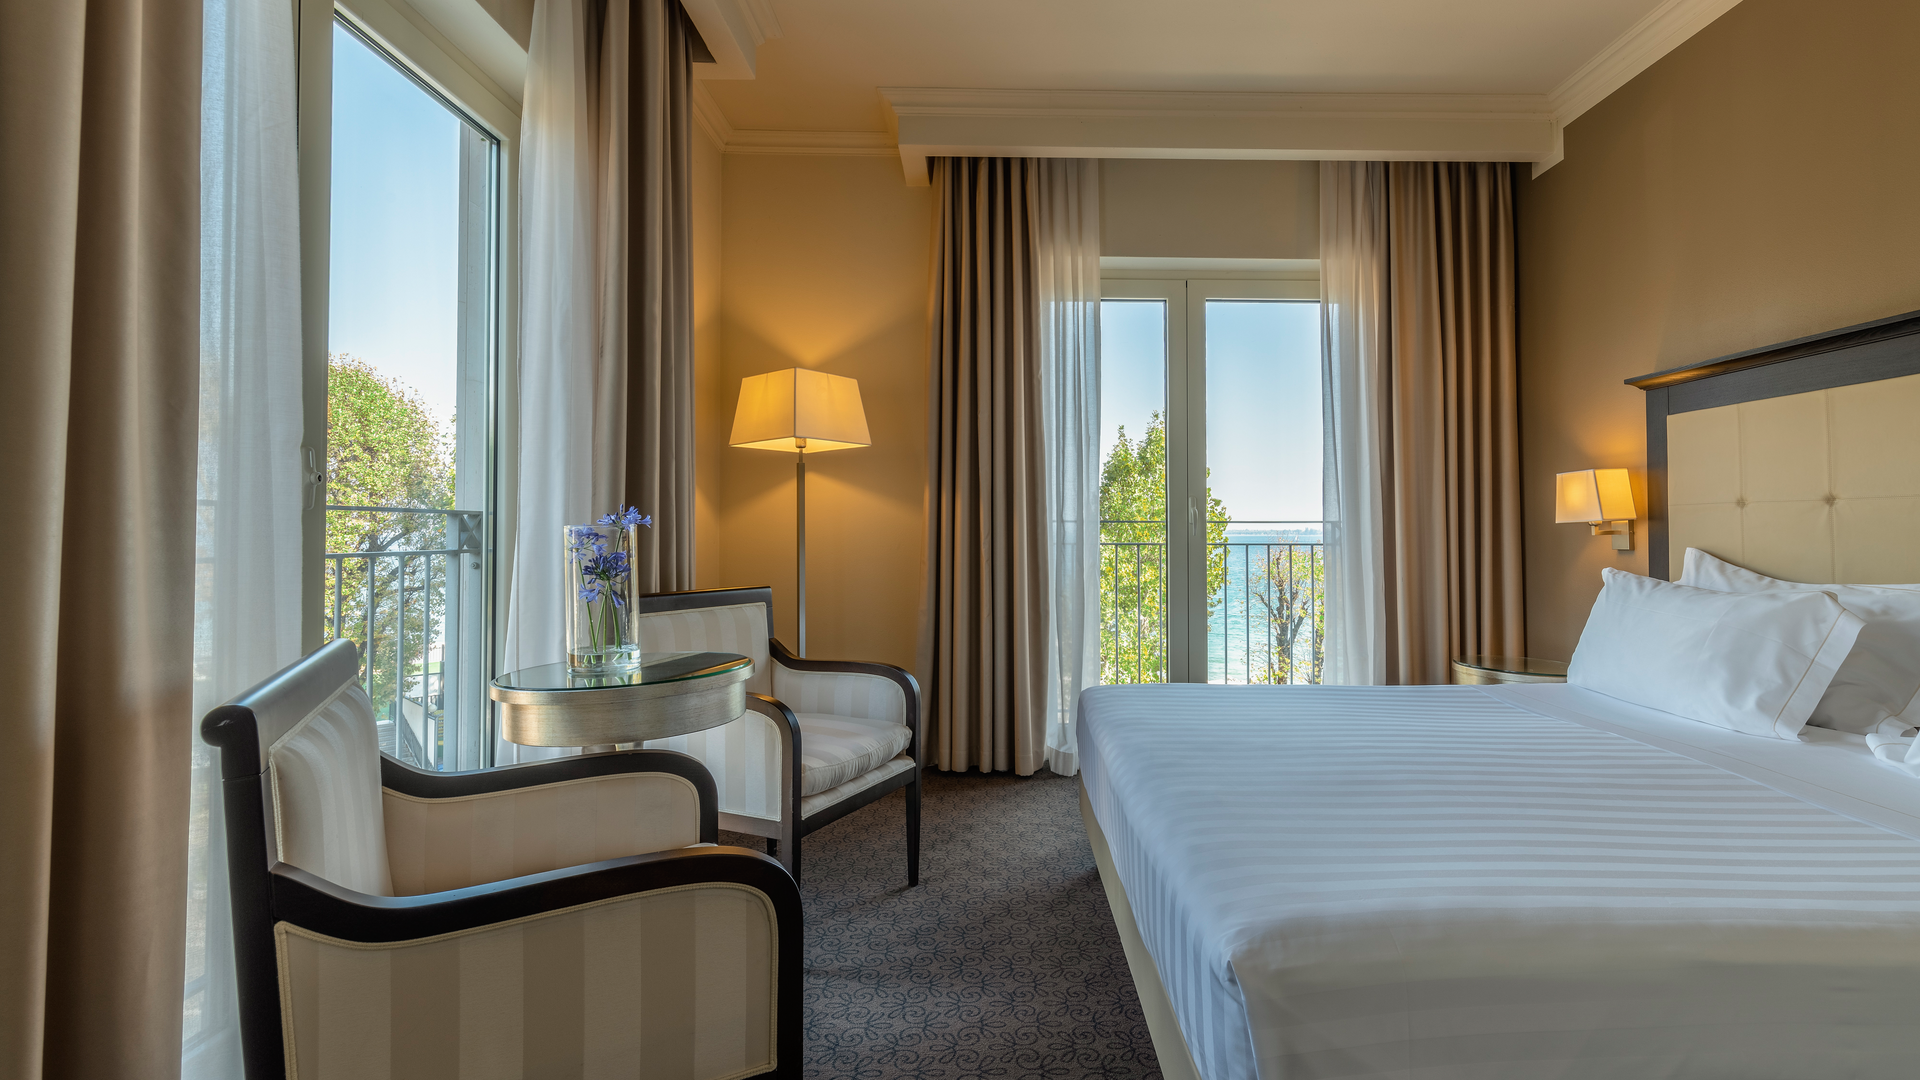 4-star Hotel on Lake Garda: a wonderful vacation